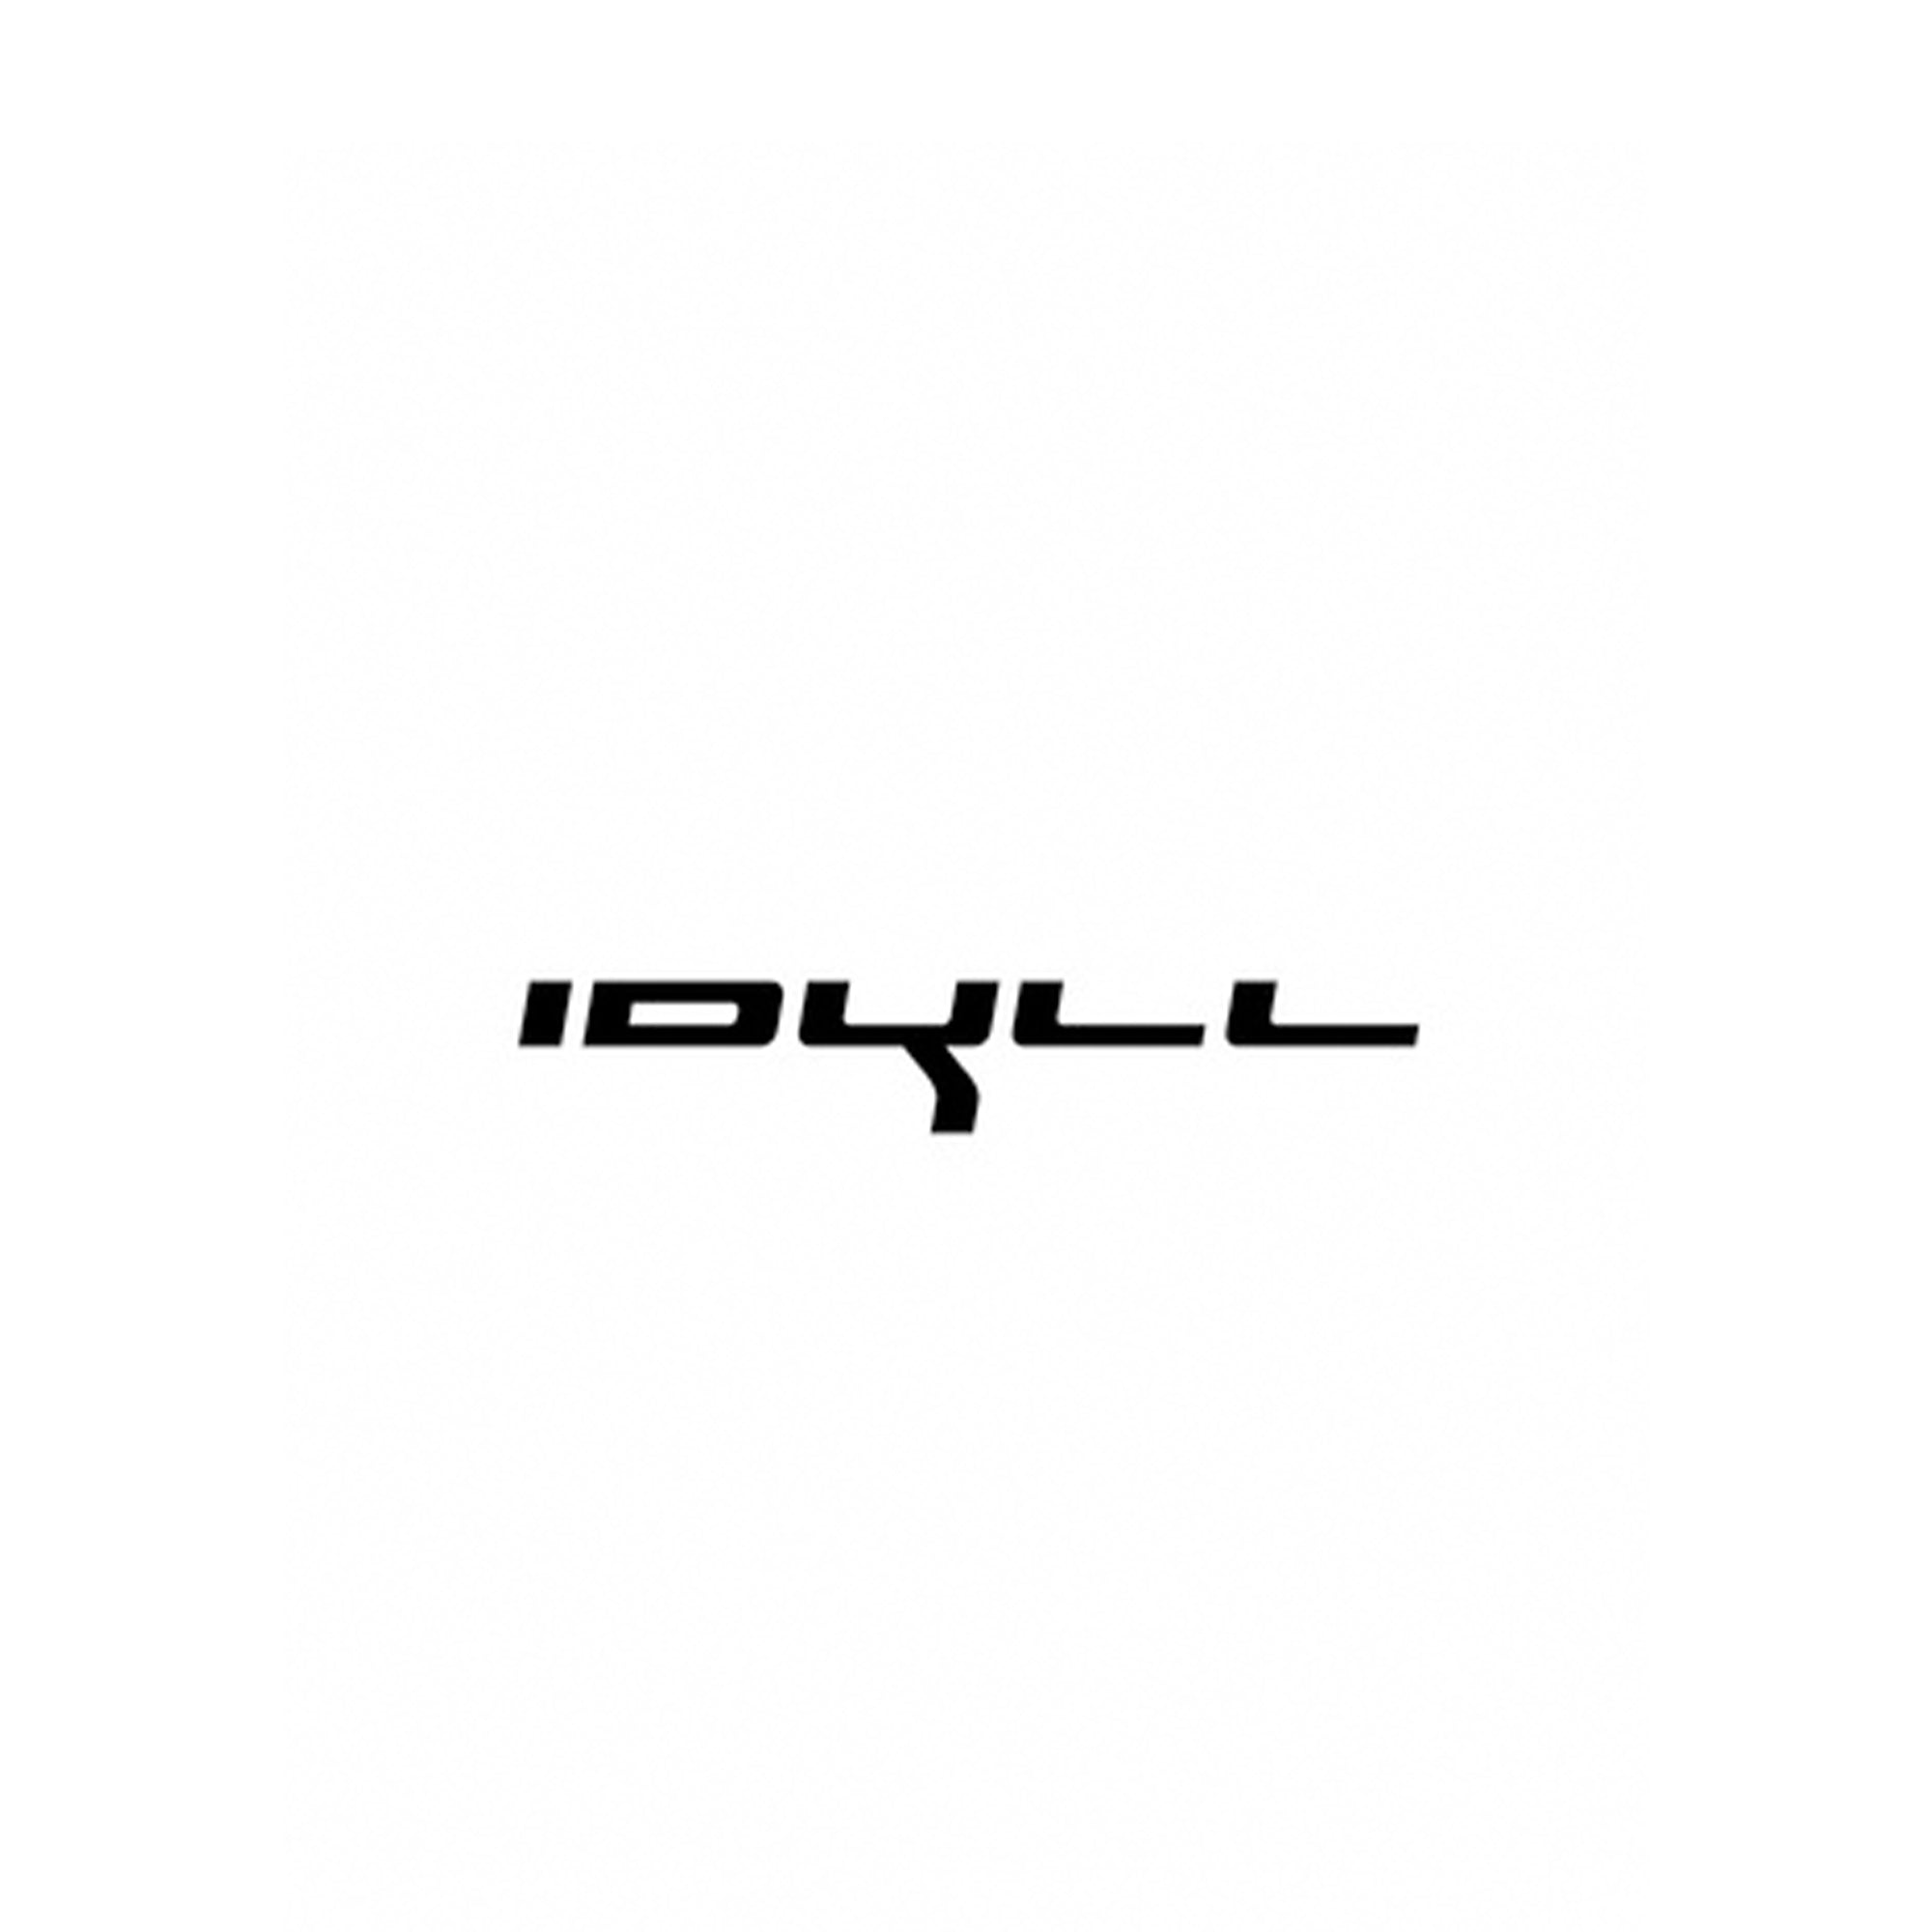 Idyll Studio logo